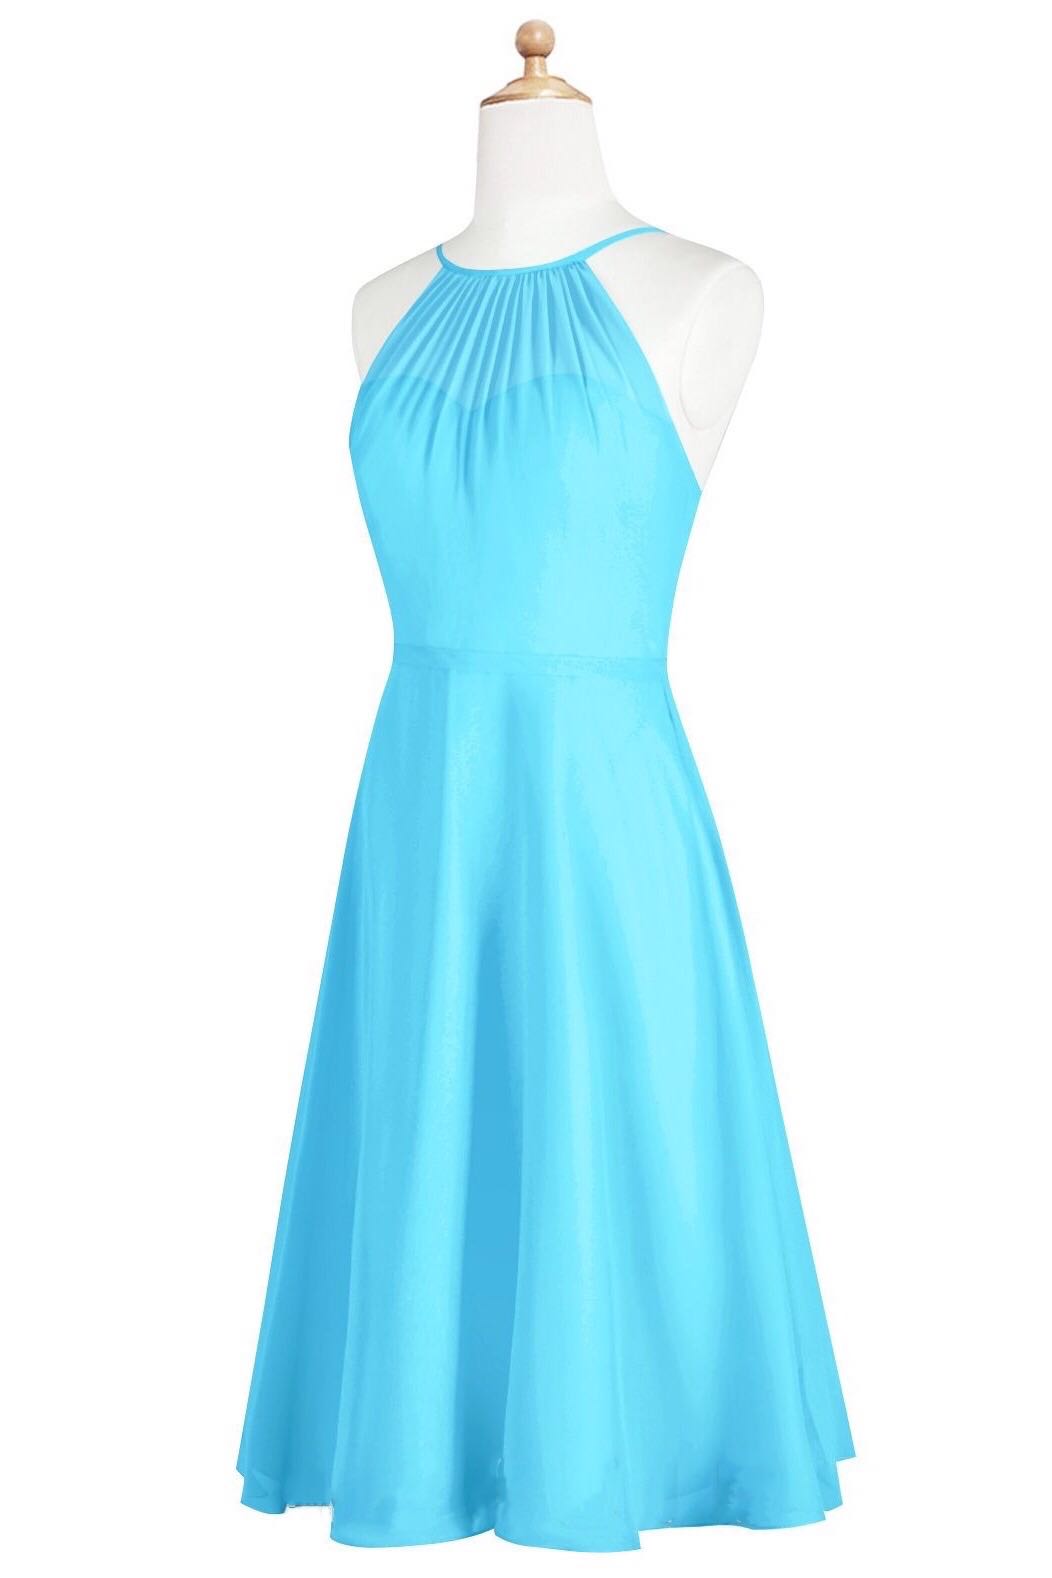 Pool Blue Halter Straps Chiffon Mini Bridesmaid Dress